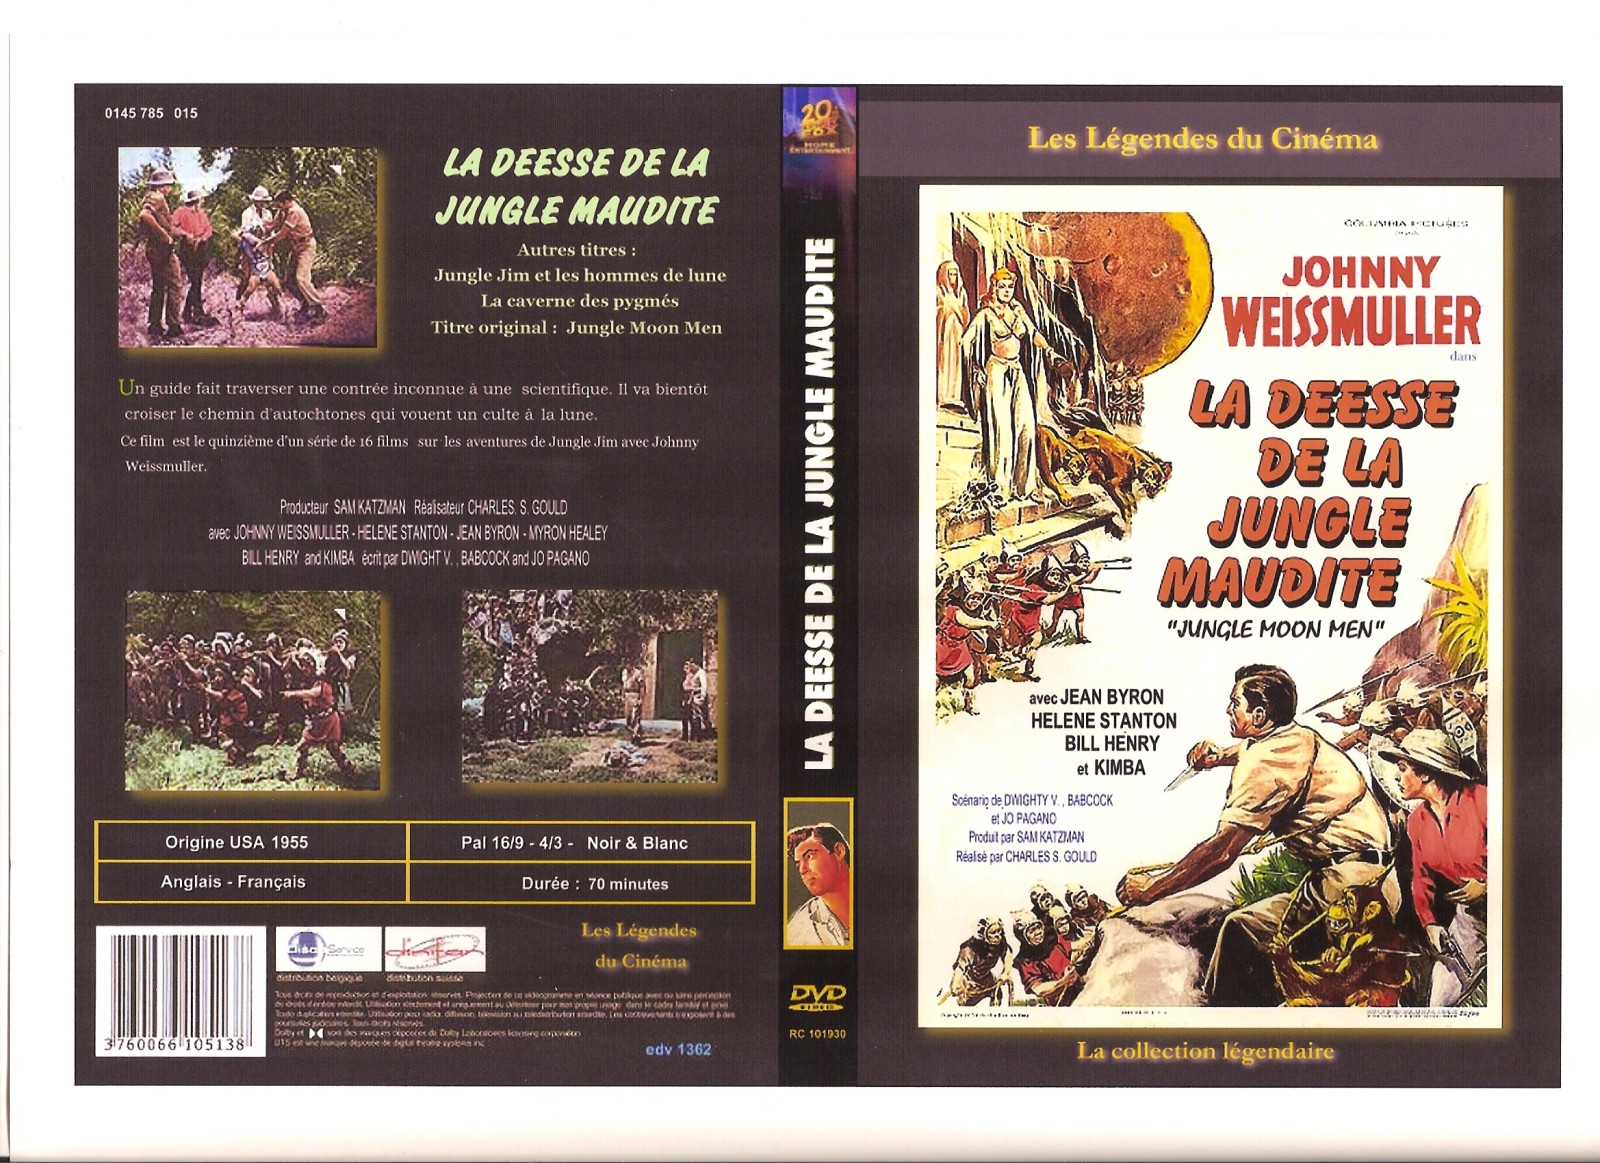 Jaquette DVD La desse de la jungle maudite